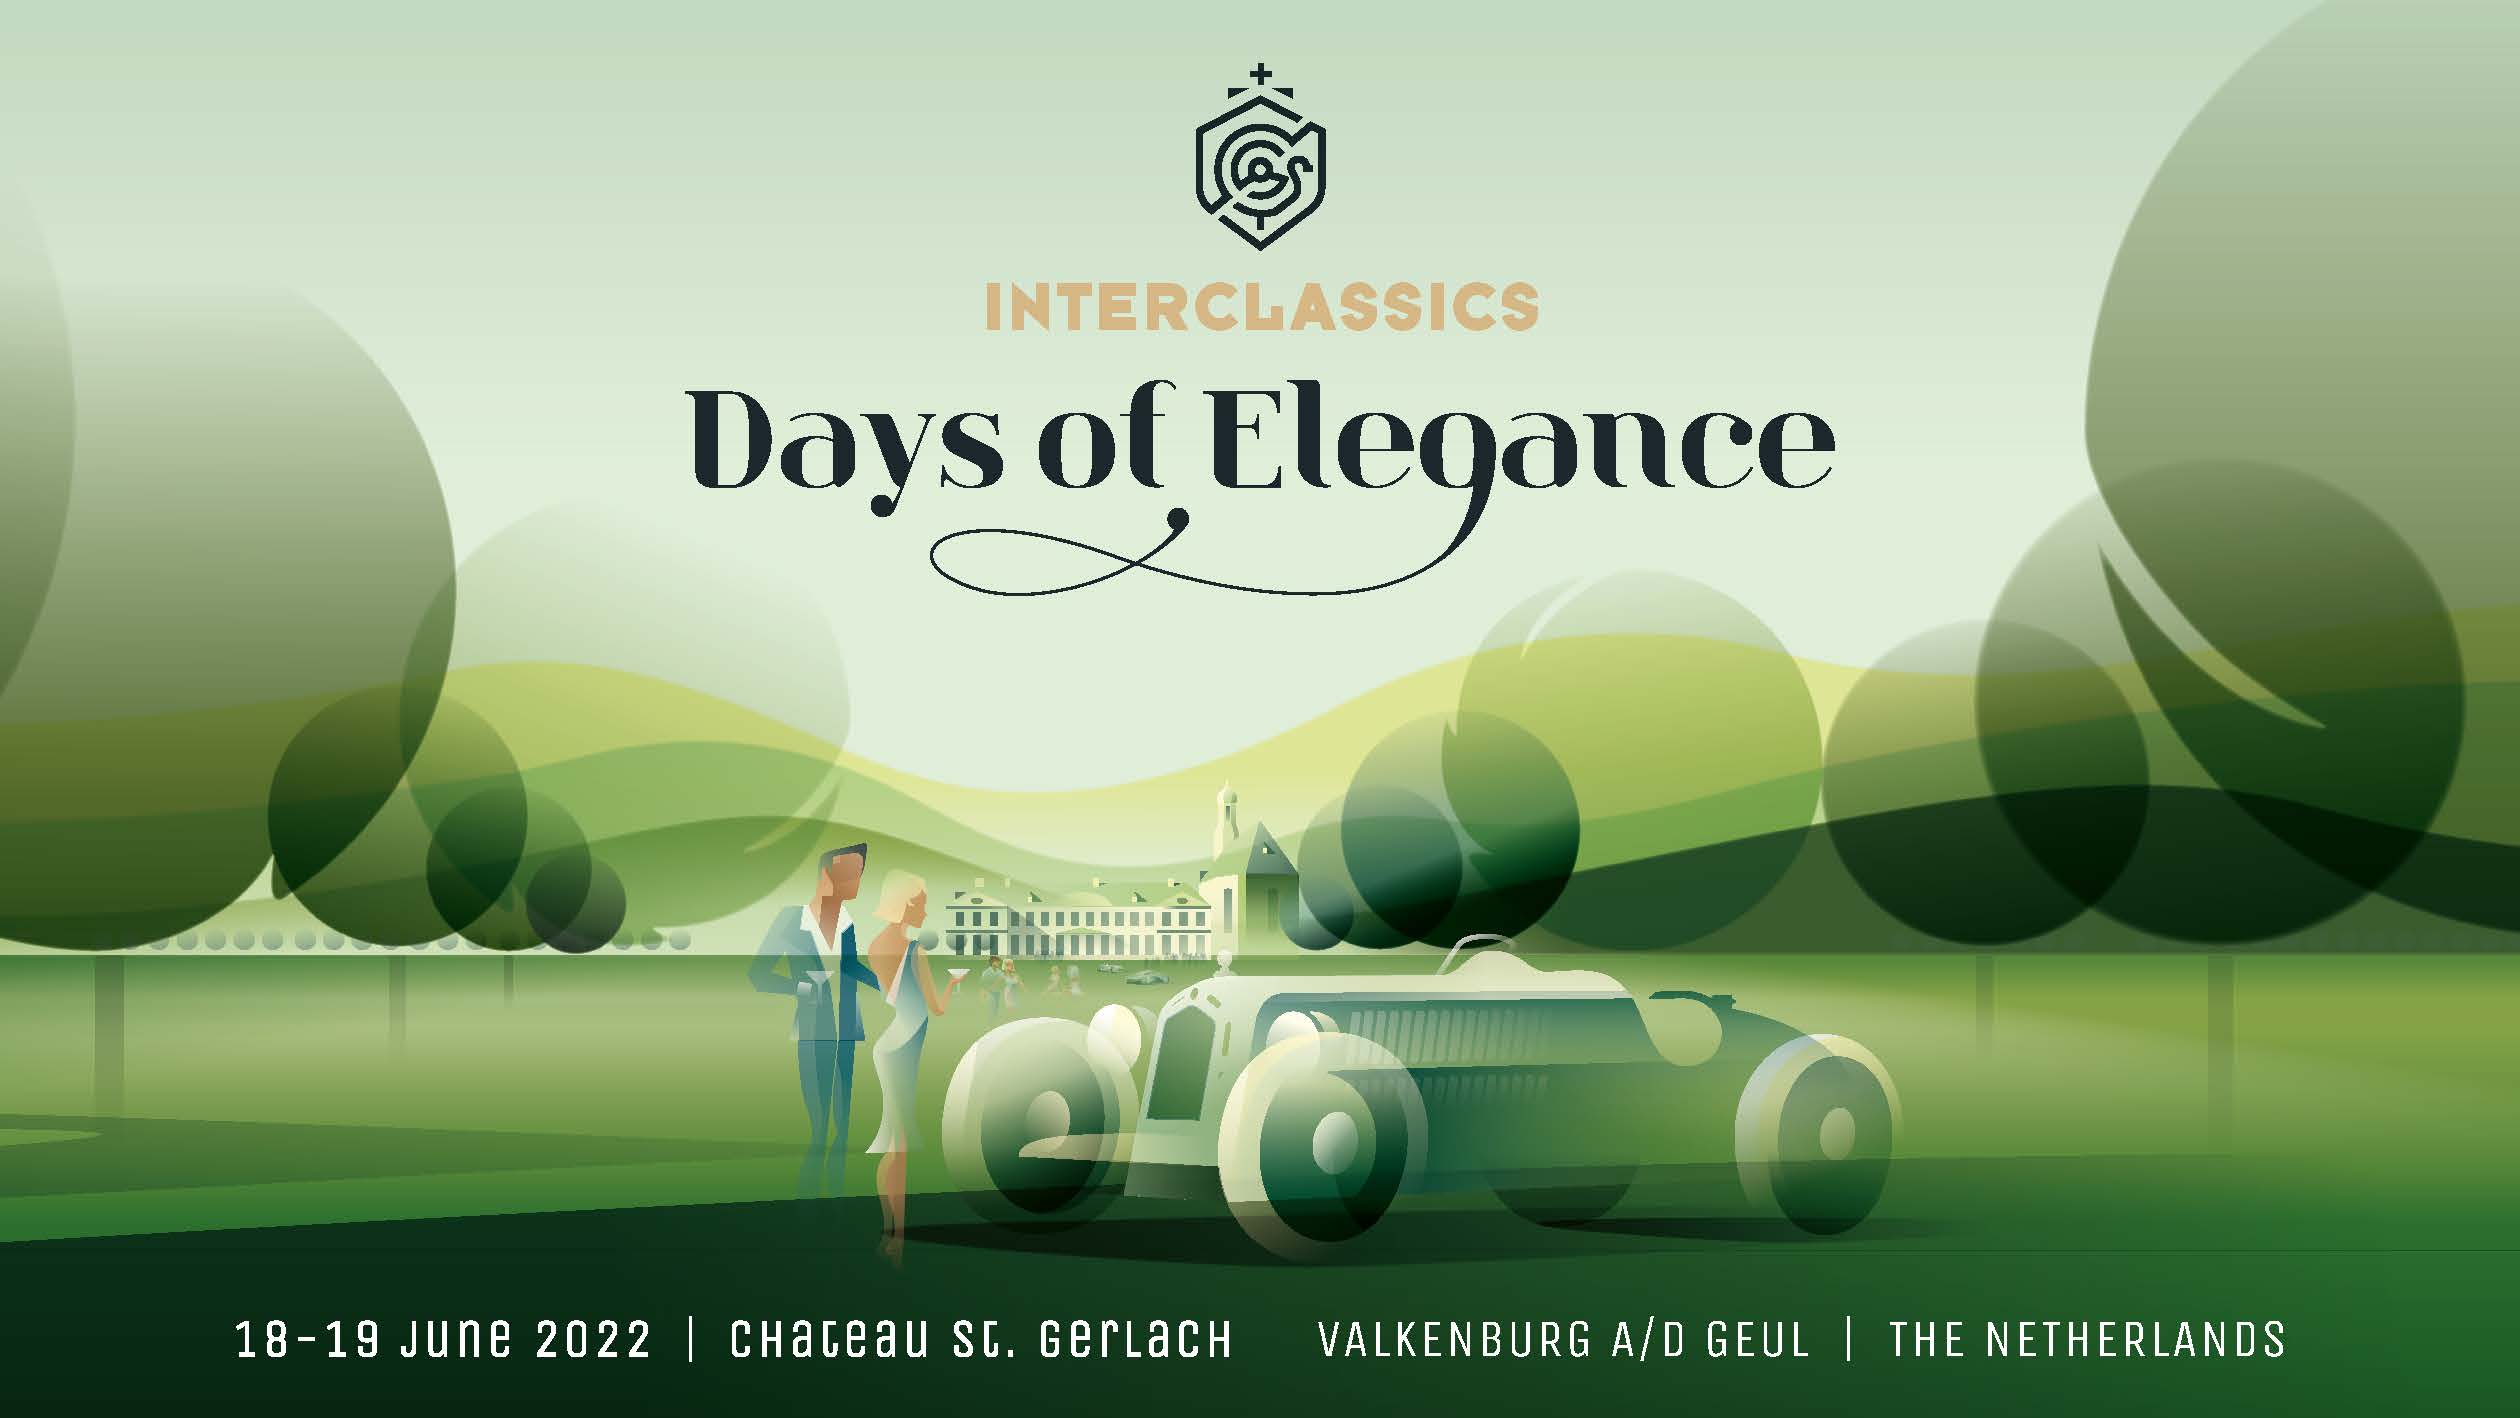 InterClassics announces new high-class event for June 2022 